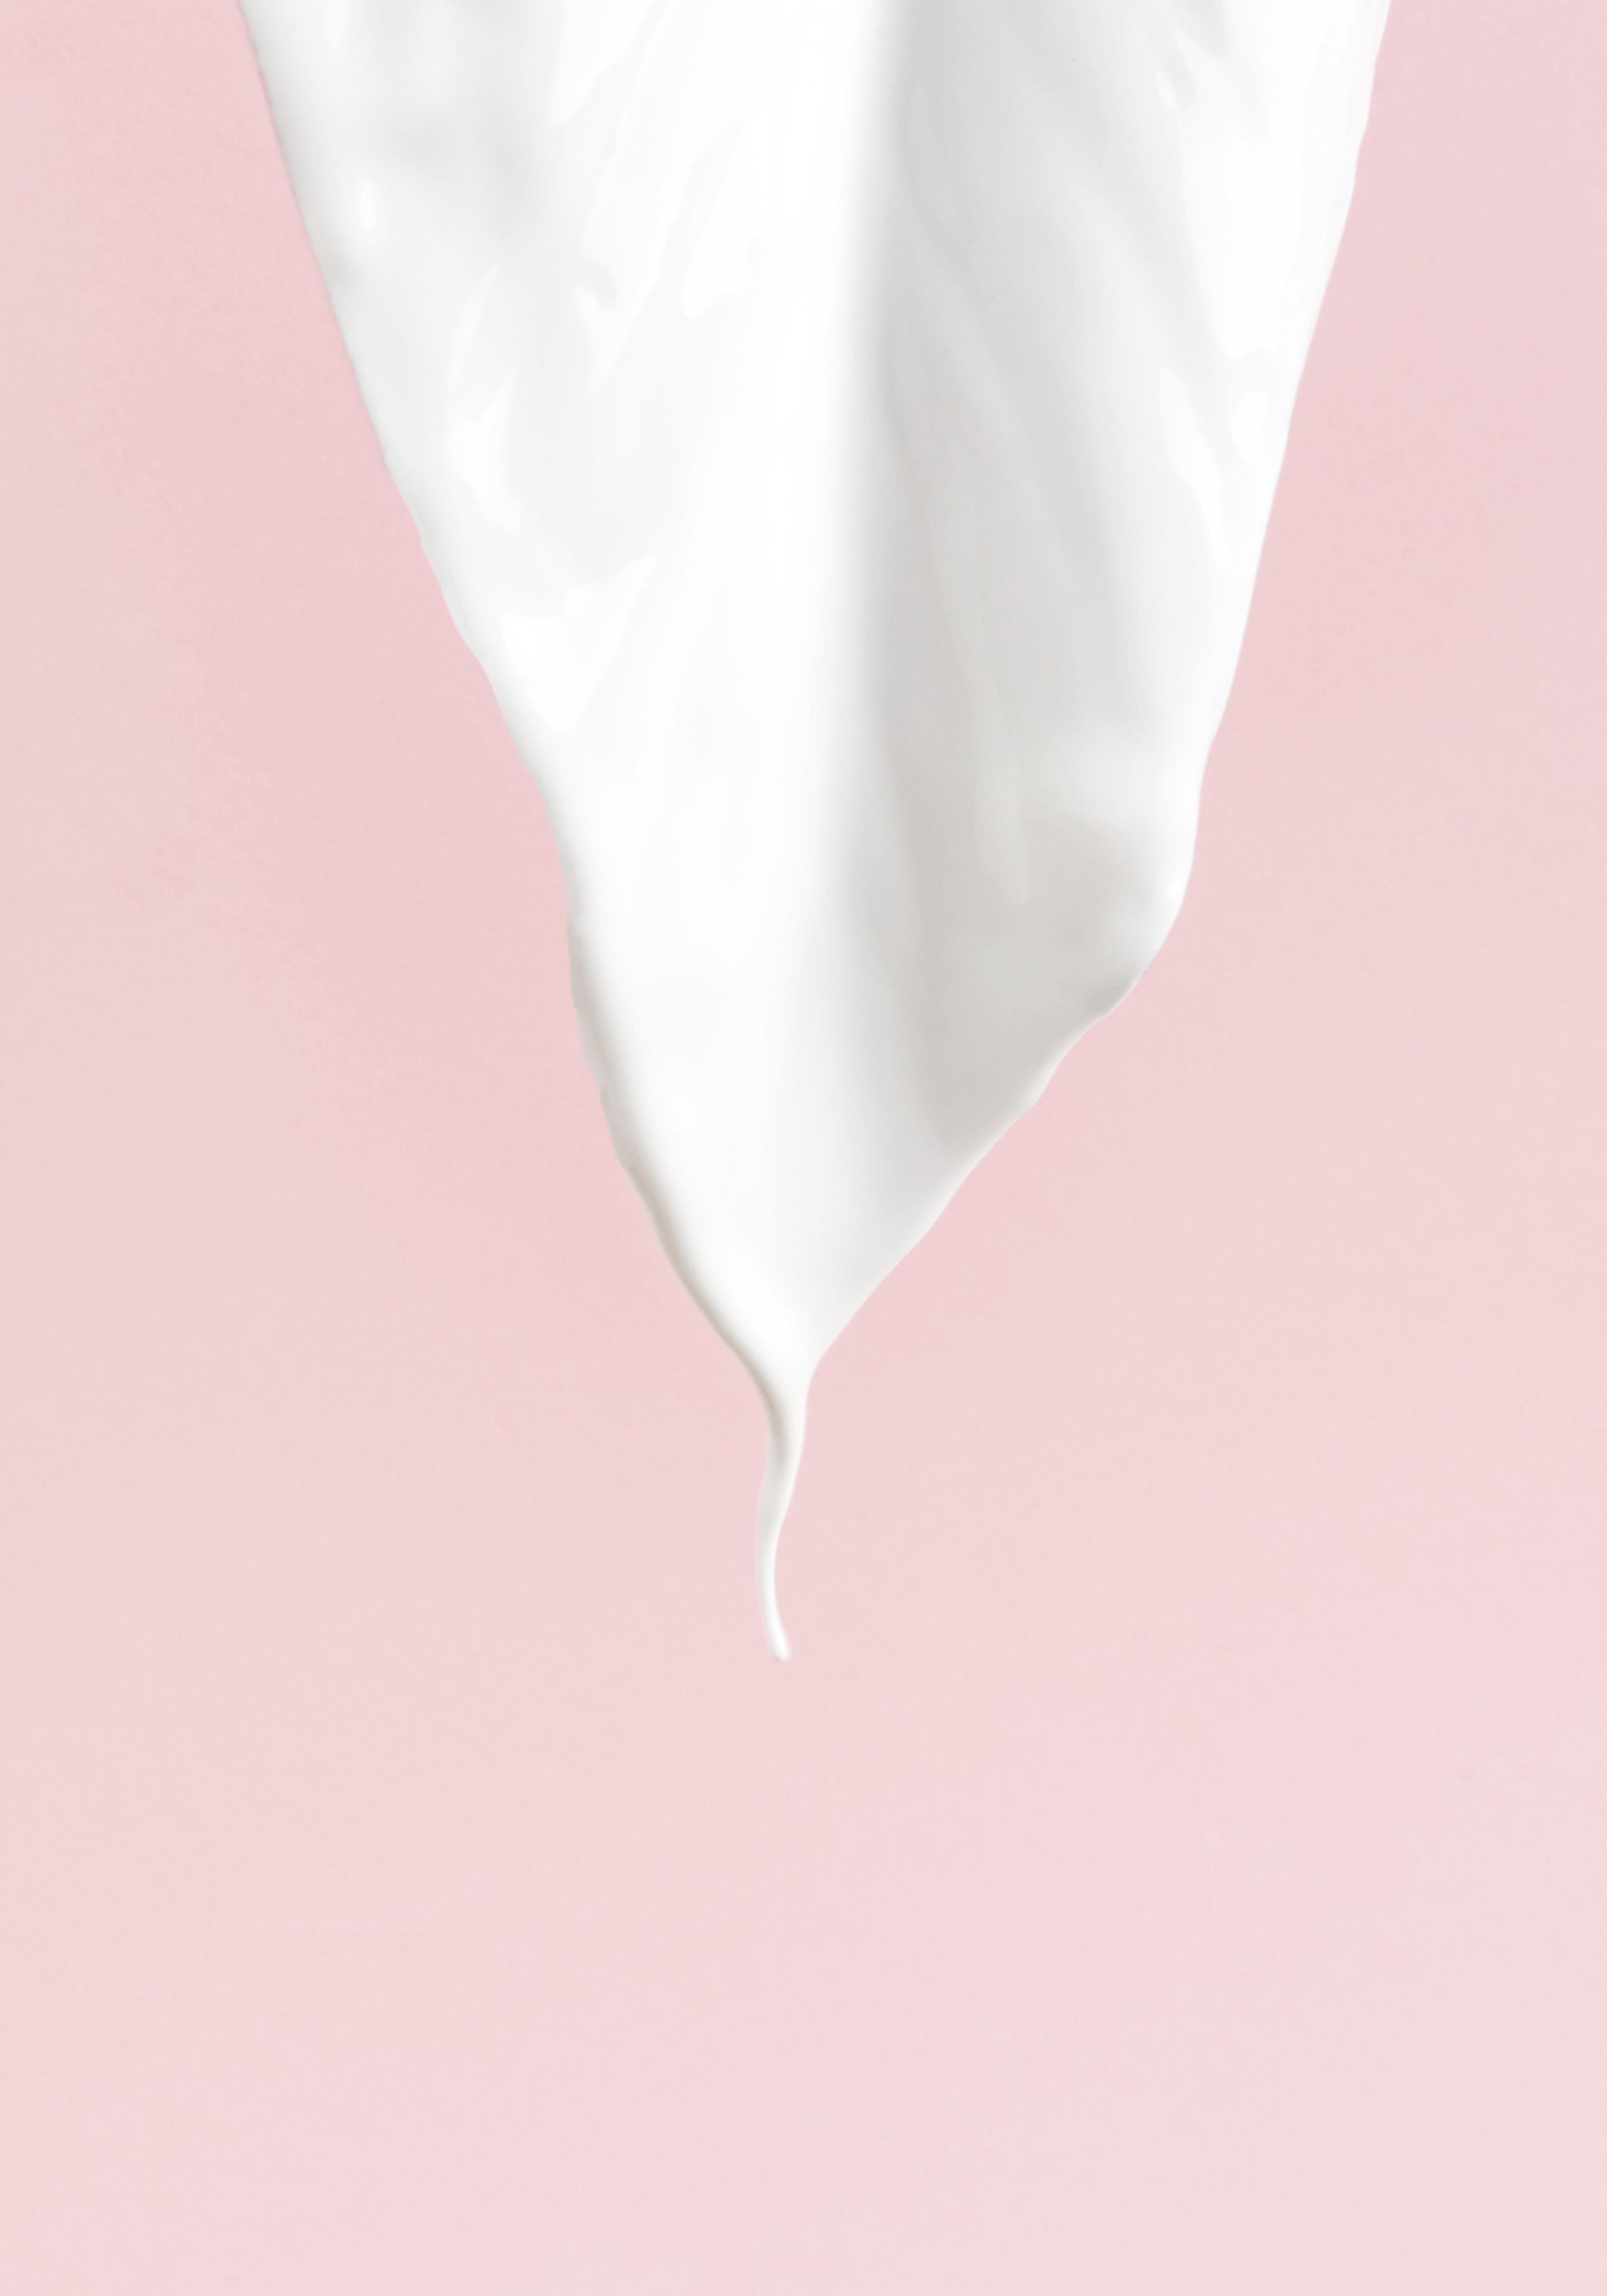 Plakat Różowo biała awangarda 